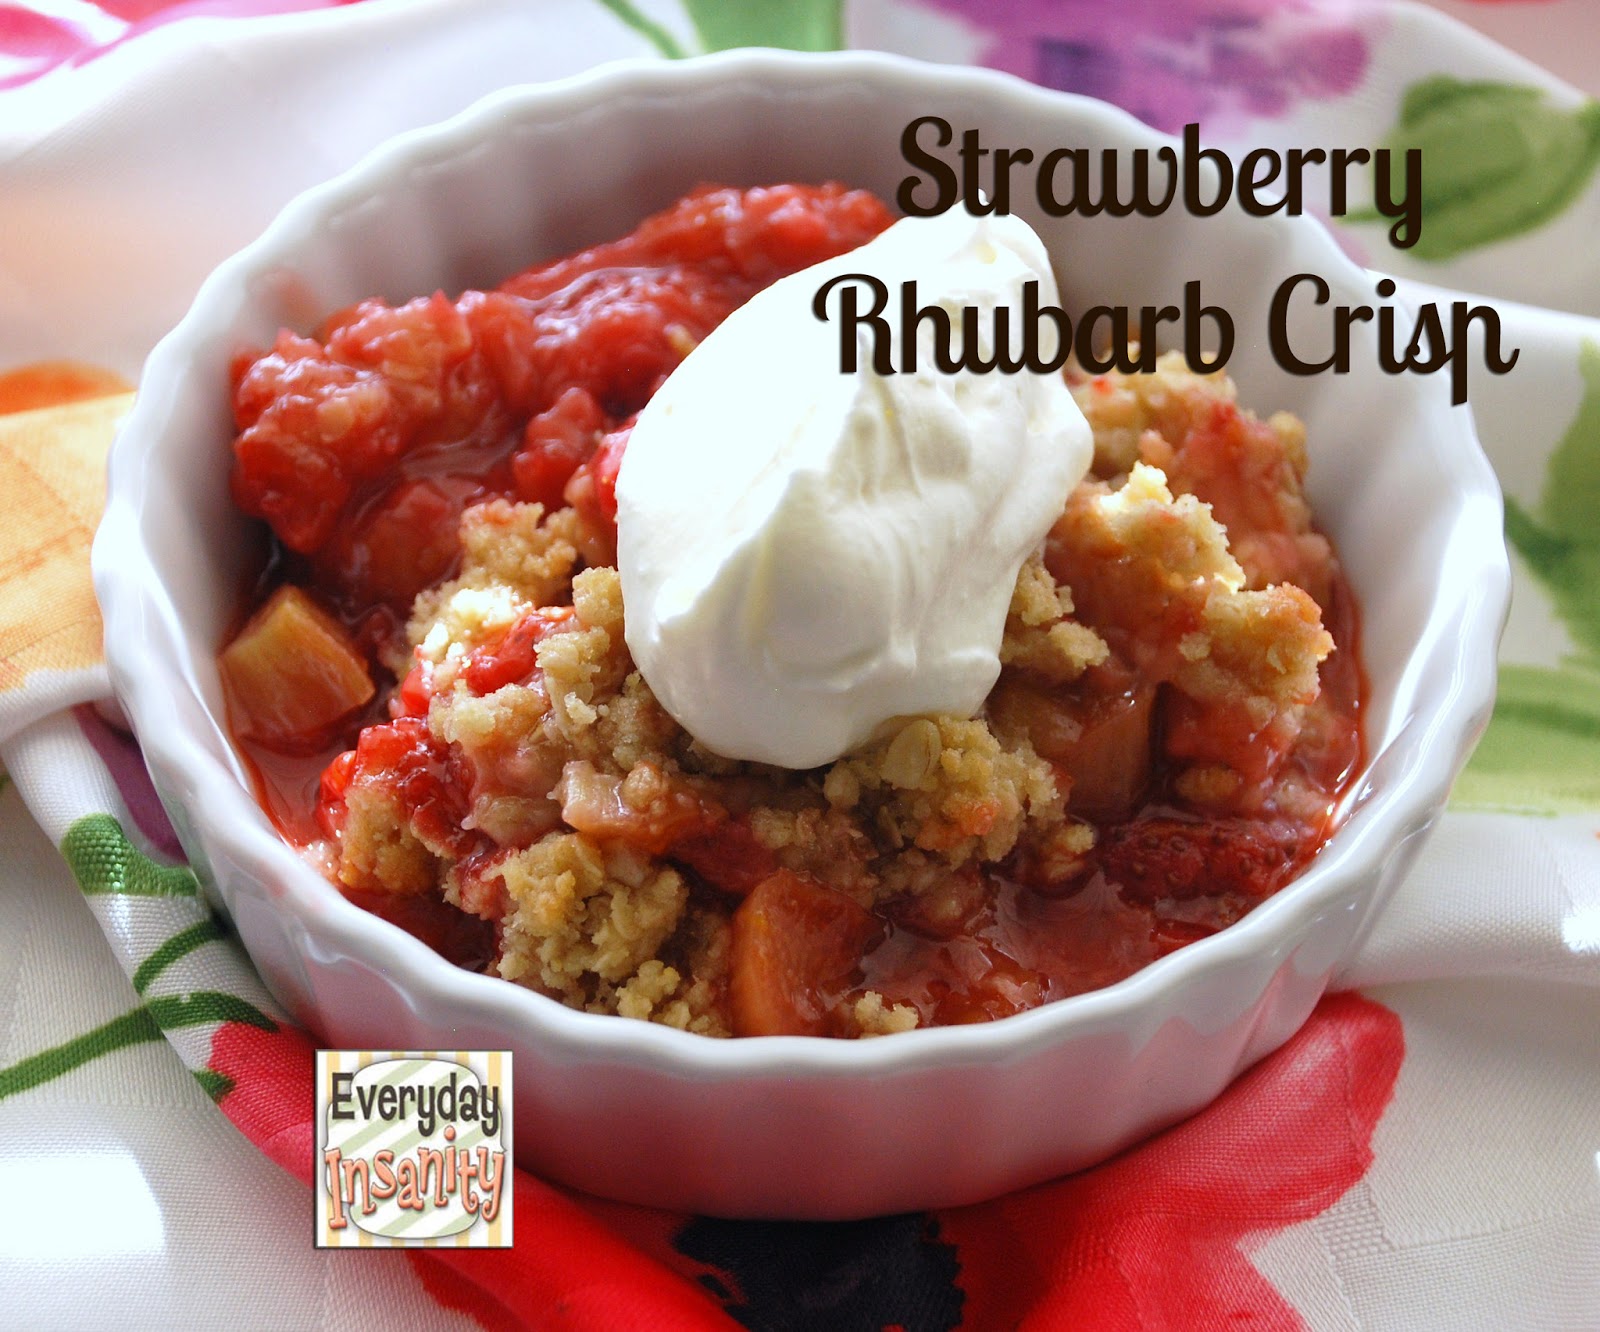 Everyday Insanity...: Strawberry Rhubarb Crisp